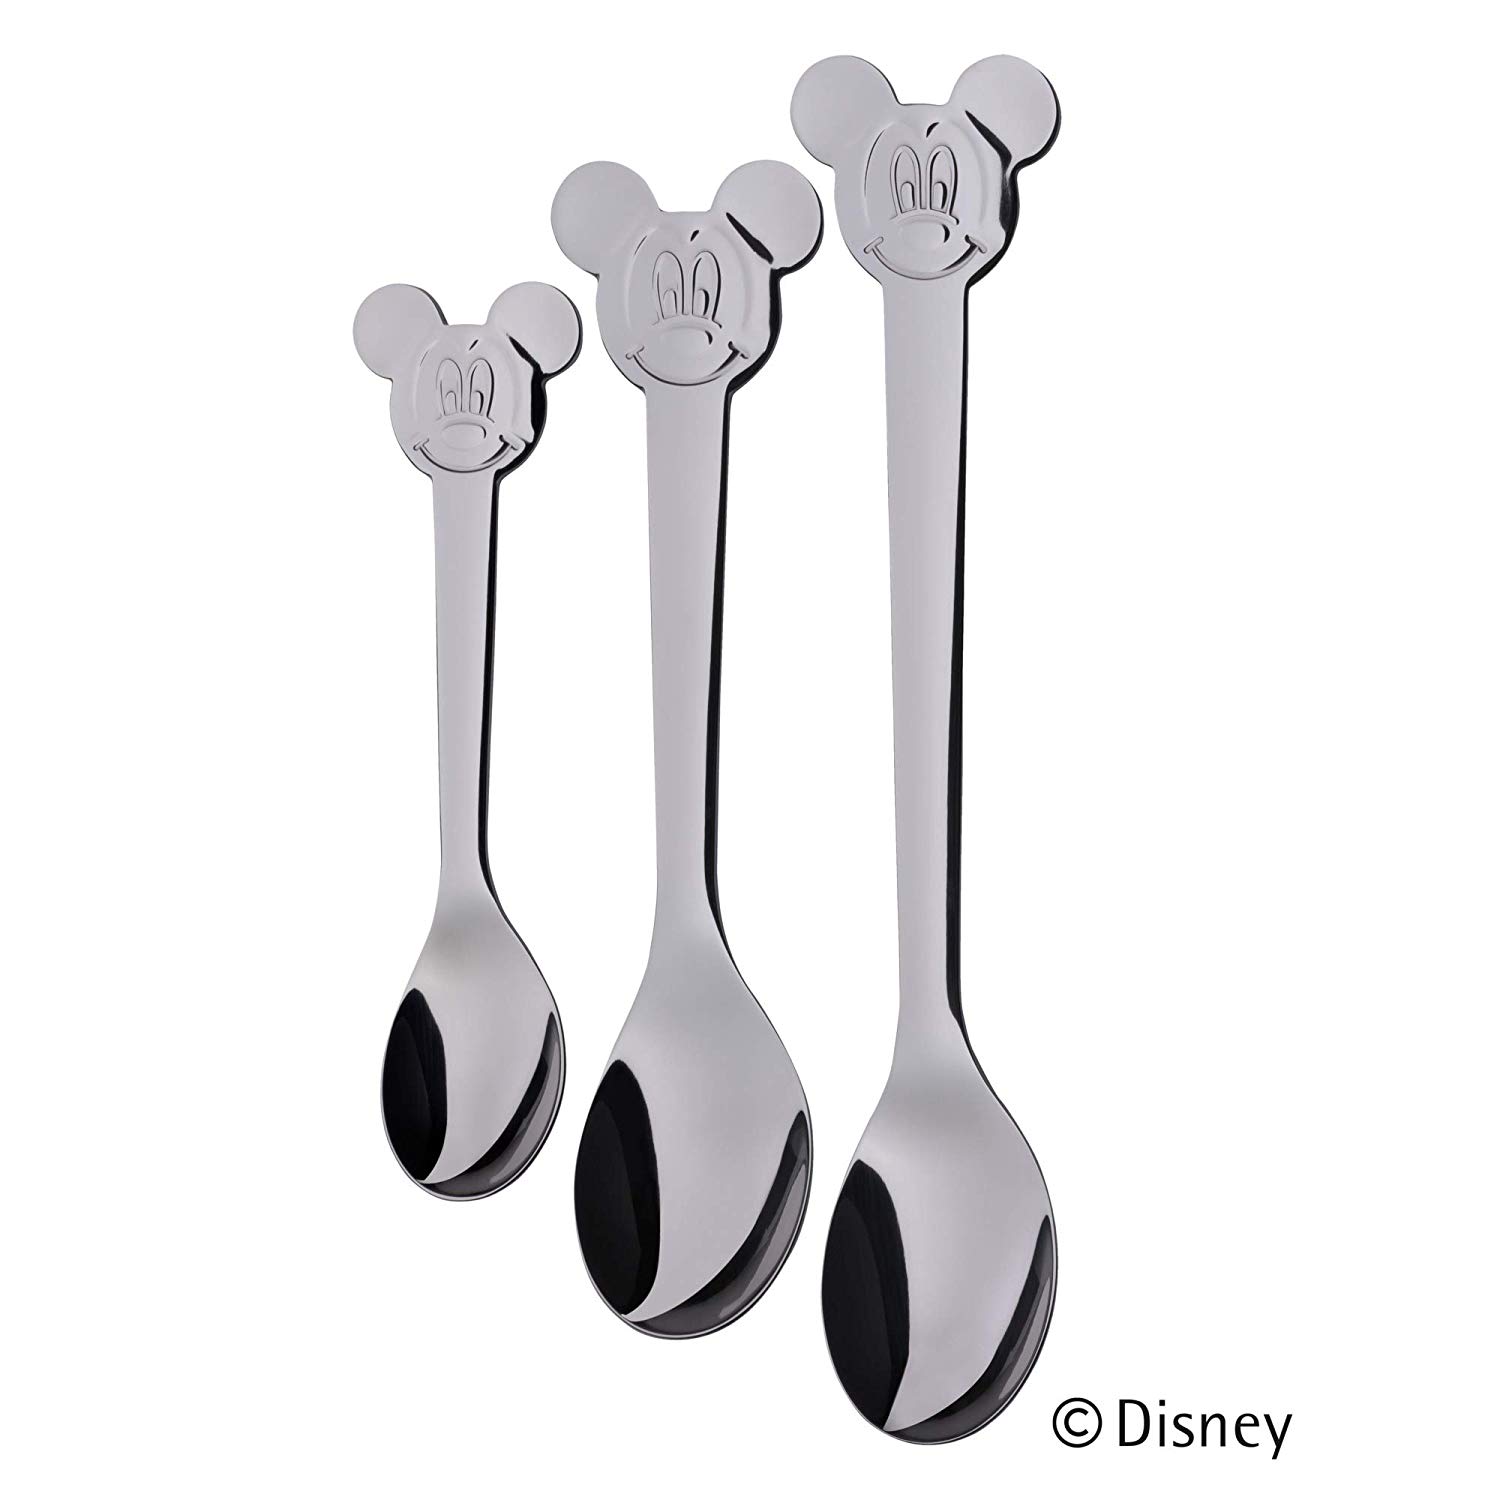 WMF Children’s Cutlery Set 5-Pieces Disney Mickey Mouse Anniversary WMF ktmart.vn 3